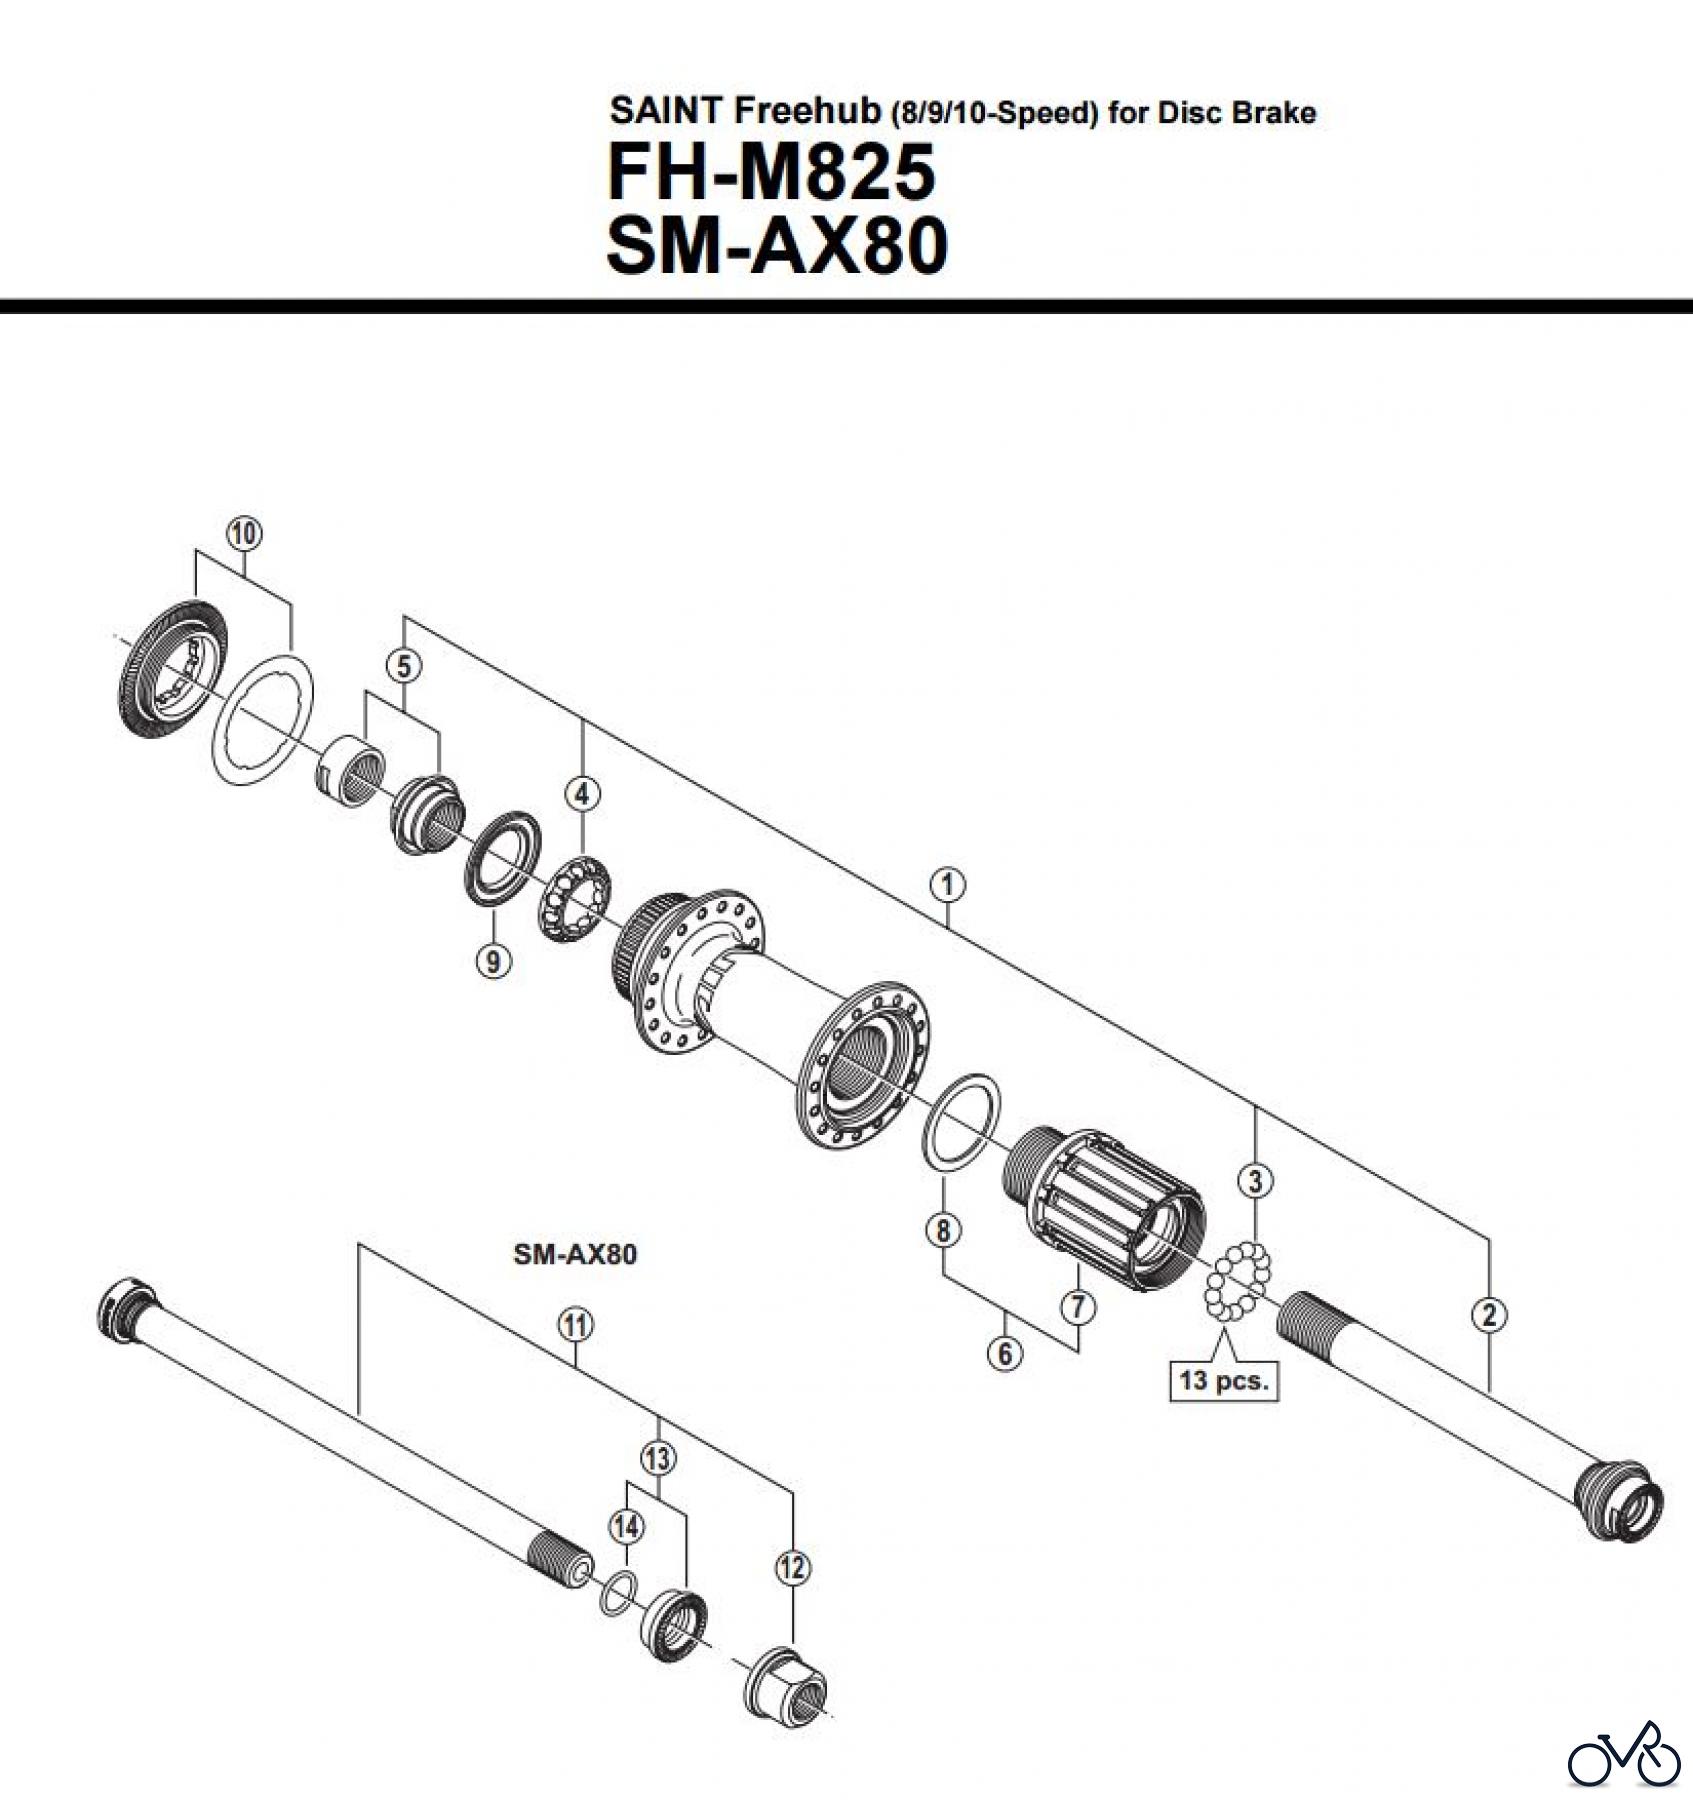  Shimano FH Free Hub - Freilaufnabe FH-M825 SAINT Freehub (8/9/10-Speed) for Disc Brak